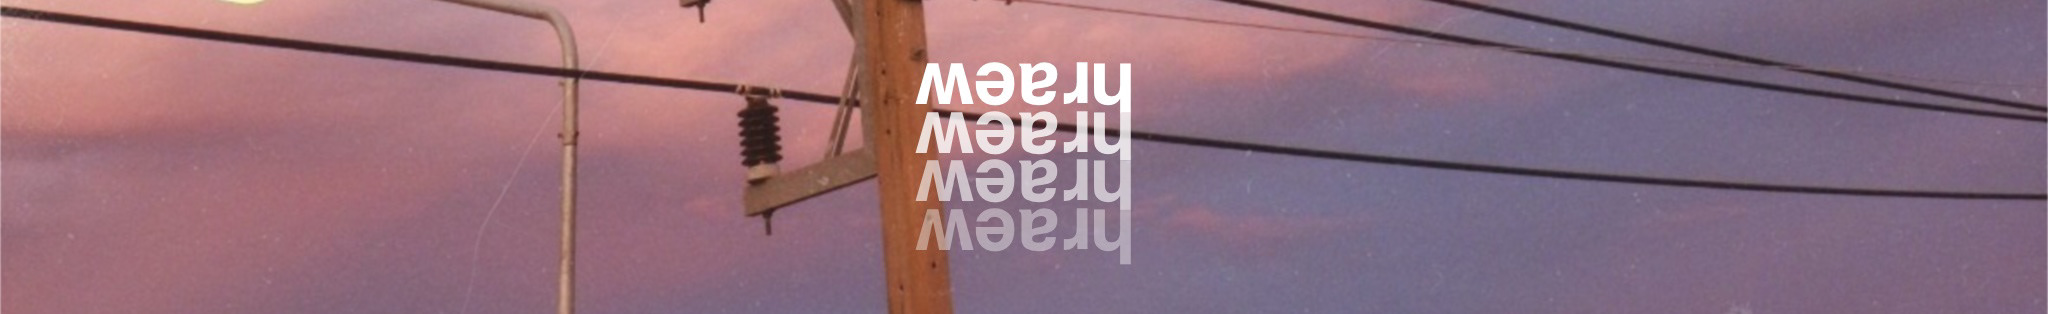 hraevv —'s profile banner